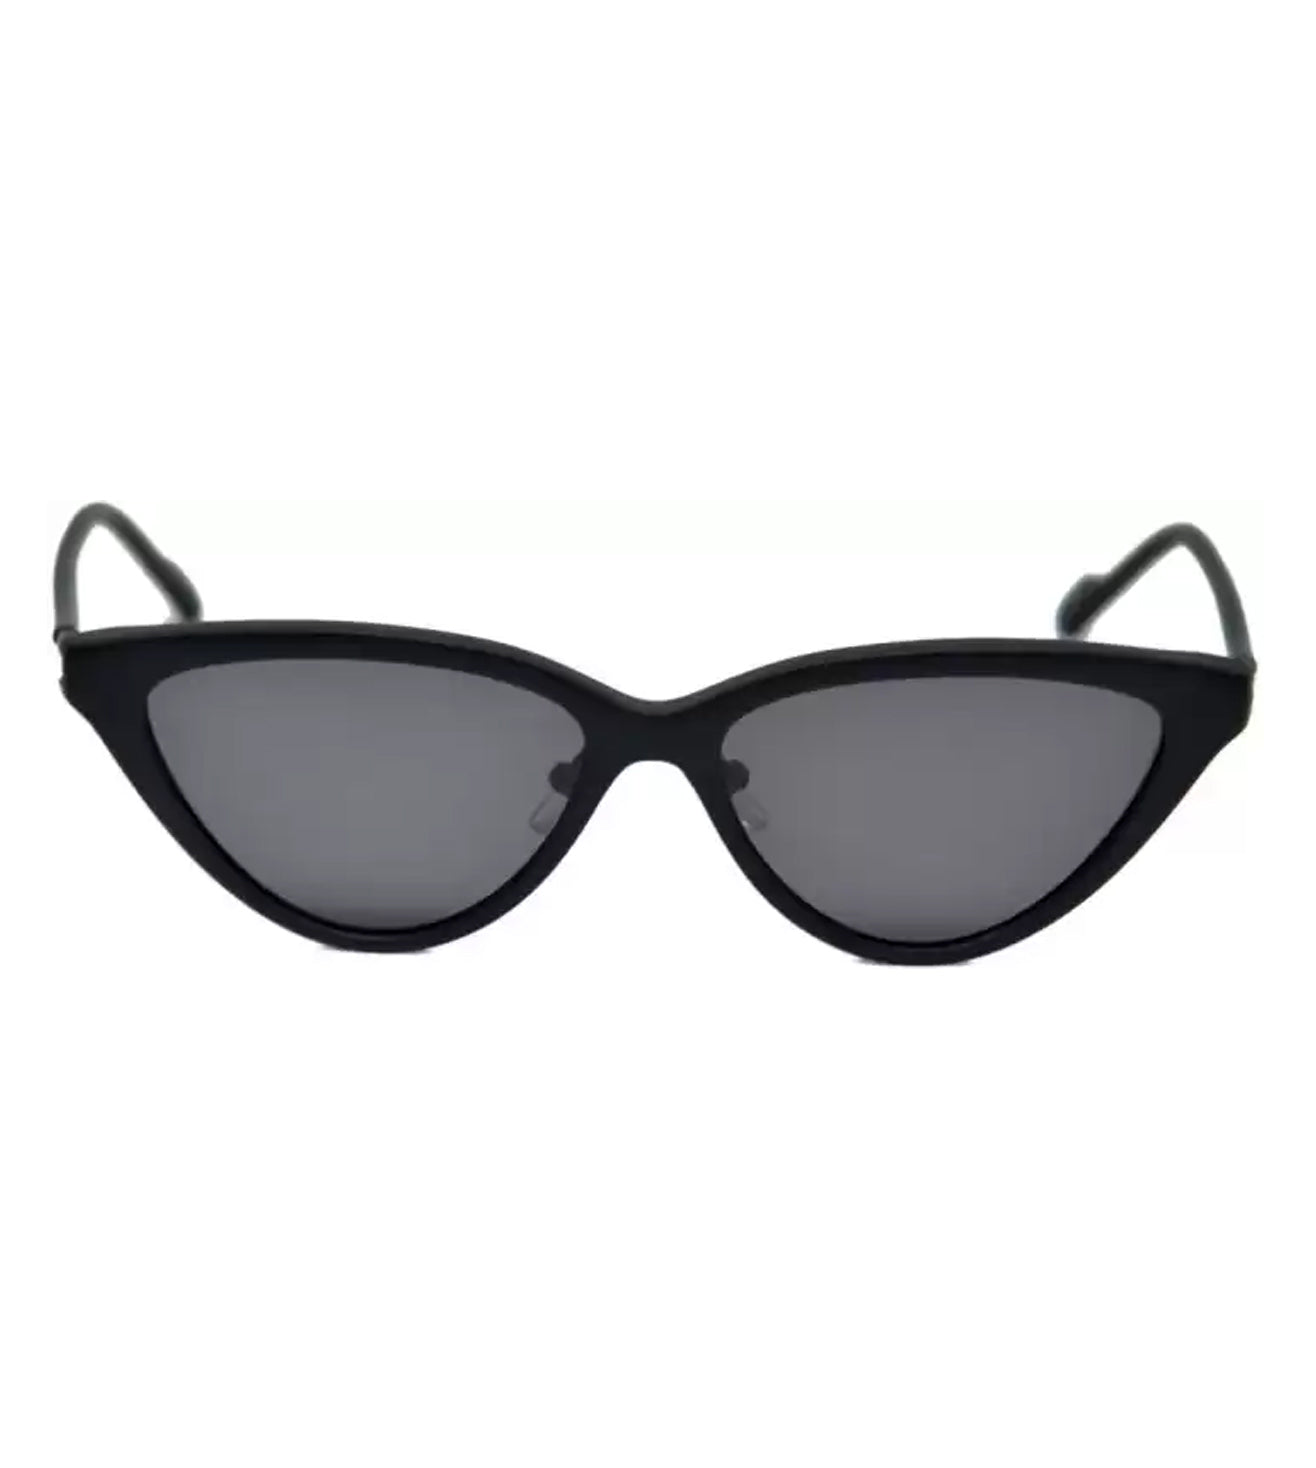 Adidas Originals Women's Silver Cat-eye Sunglasses